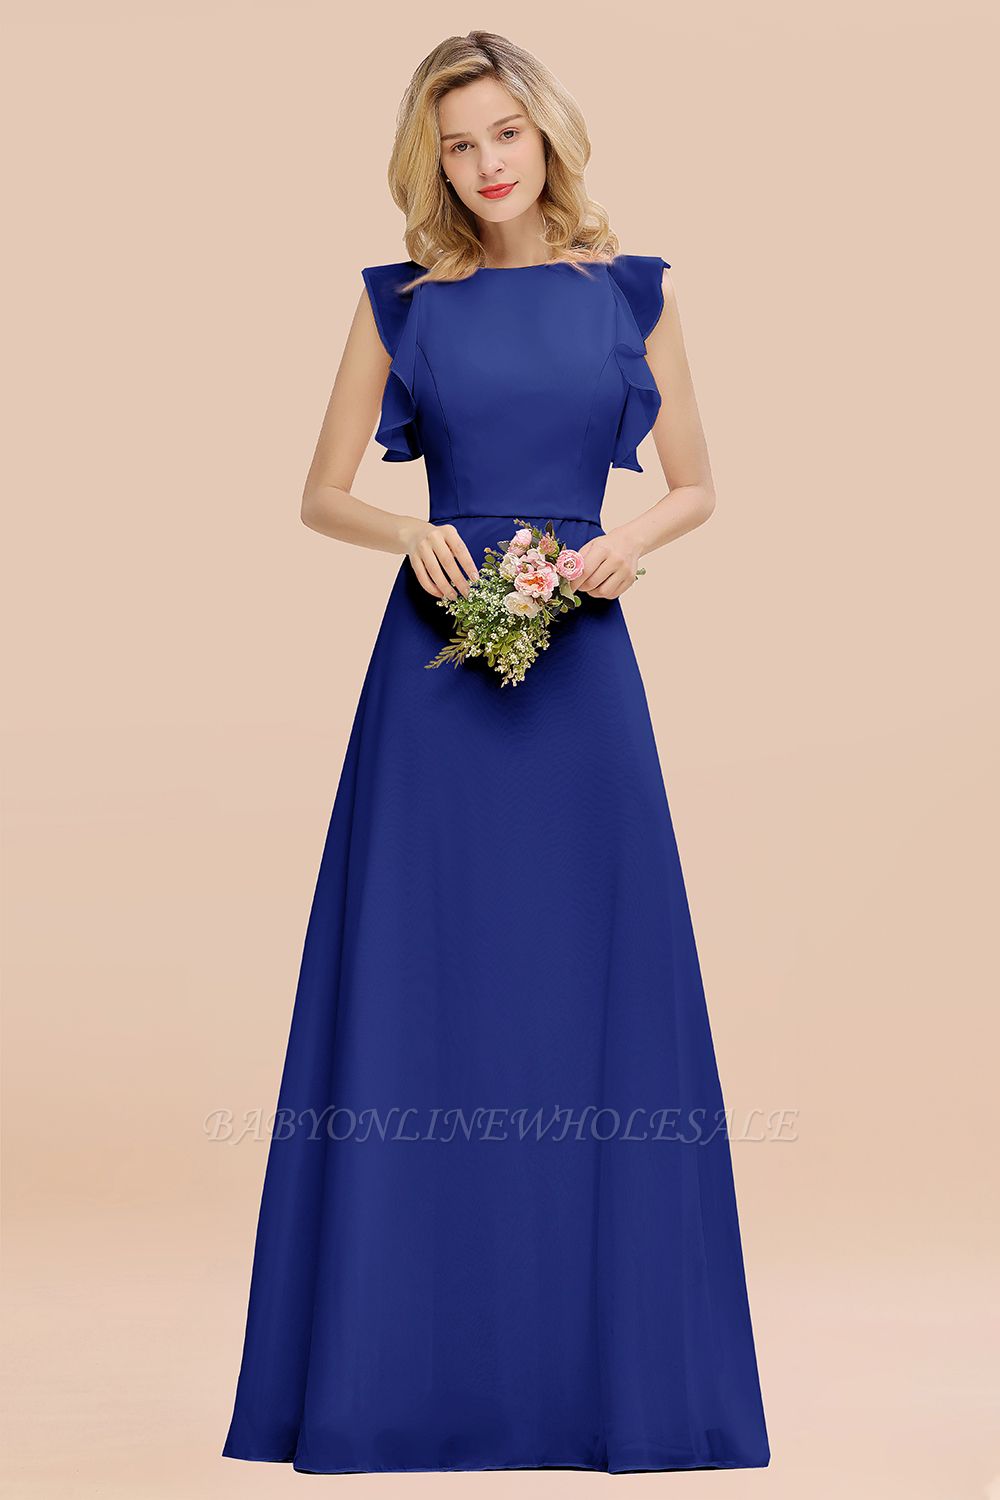 Cecilia | Chic Simple Jewel Sleeveless Bridesmaid Dress Online